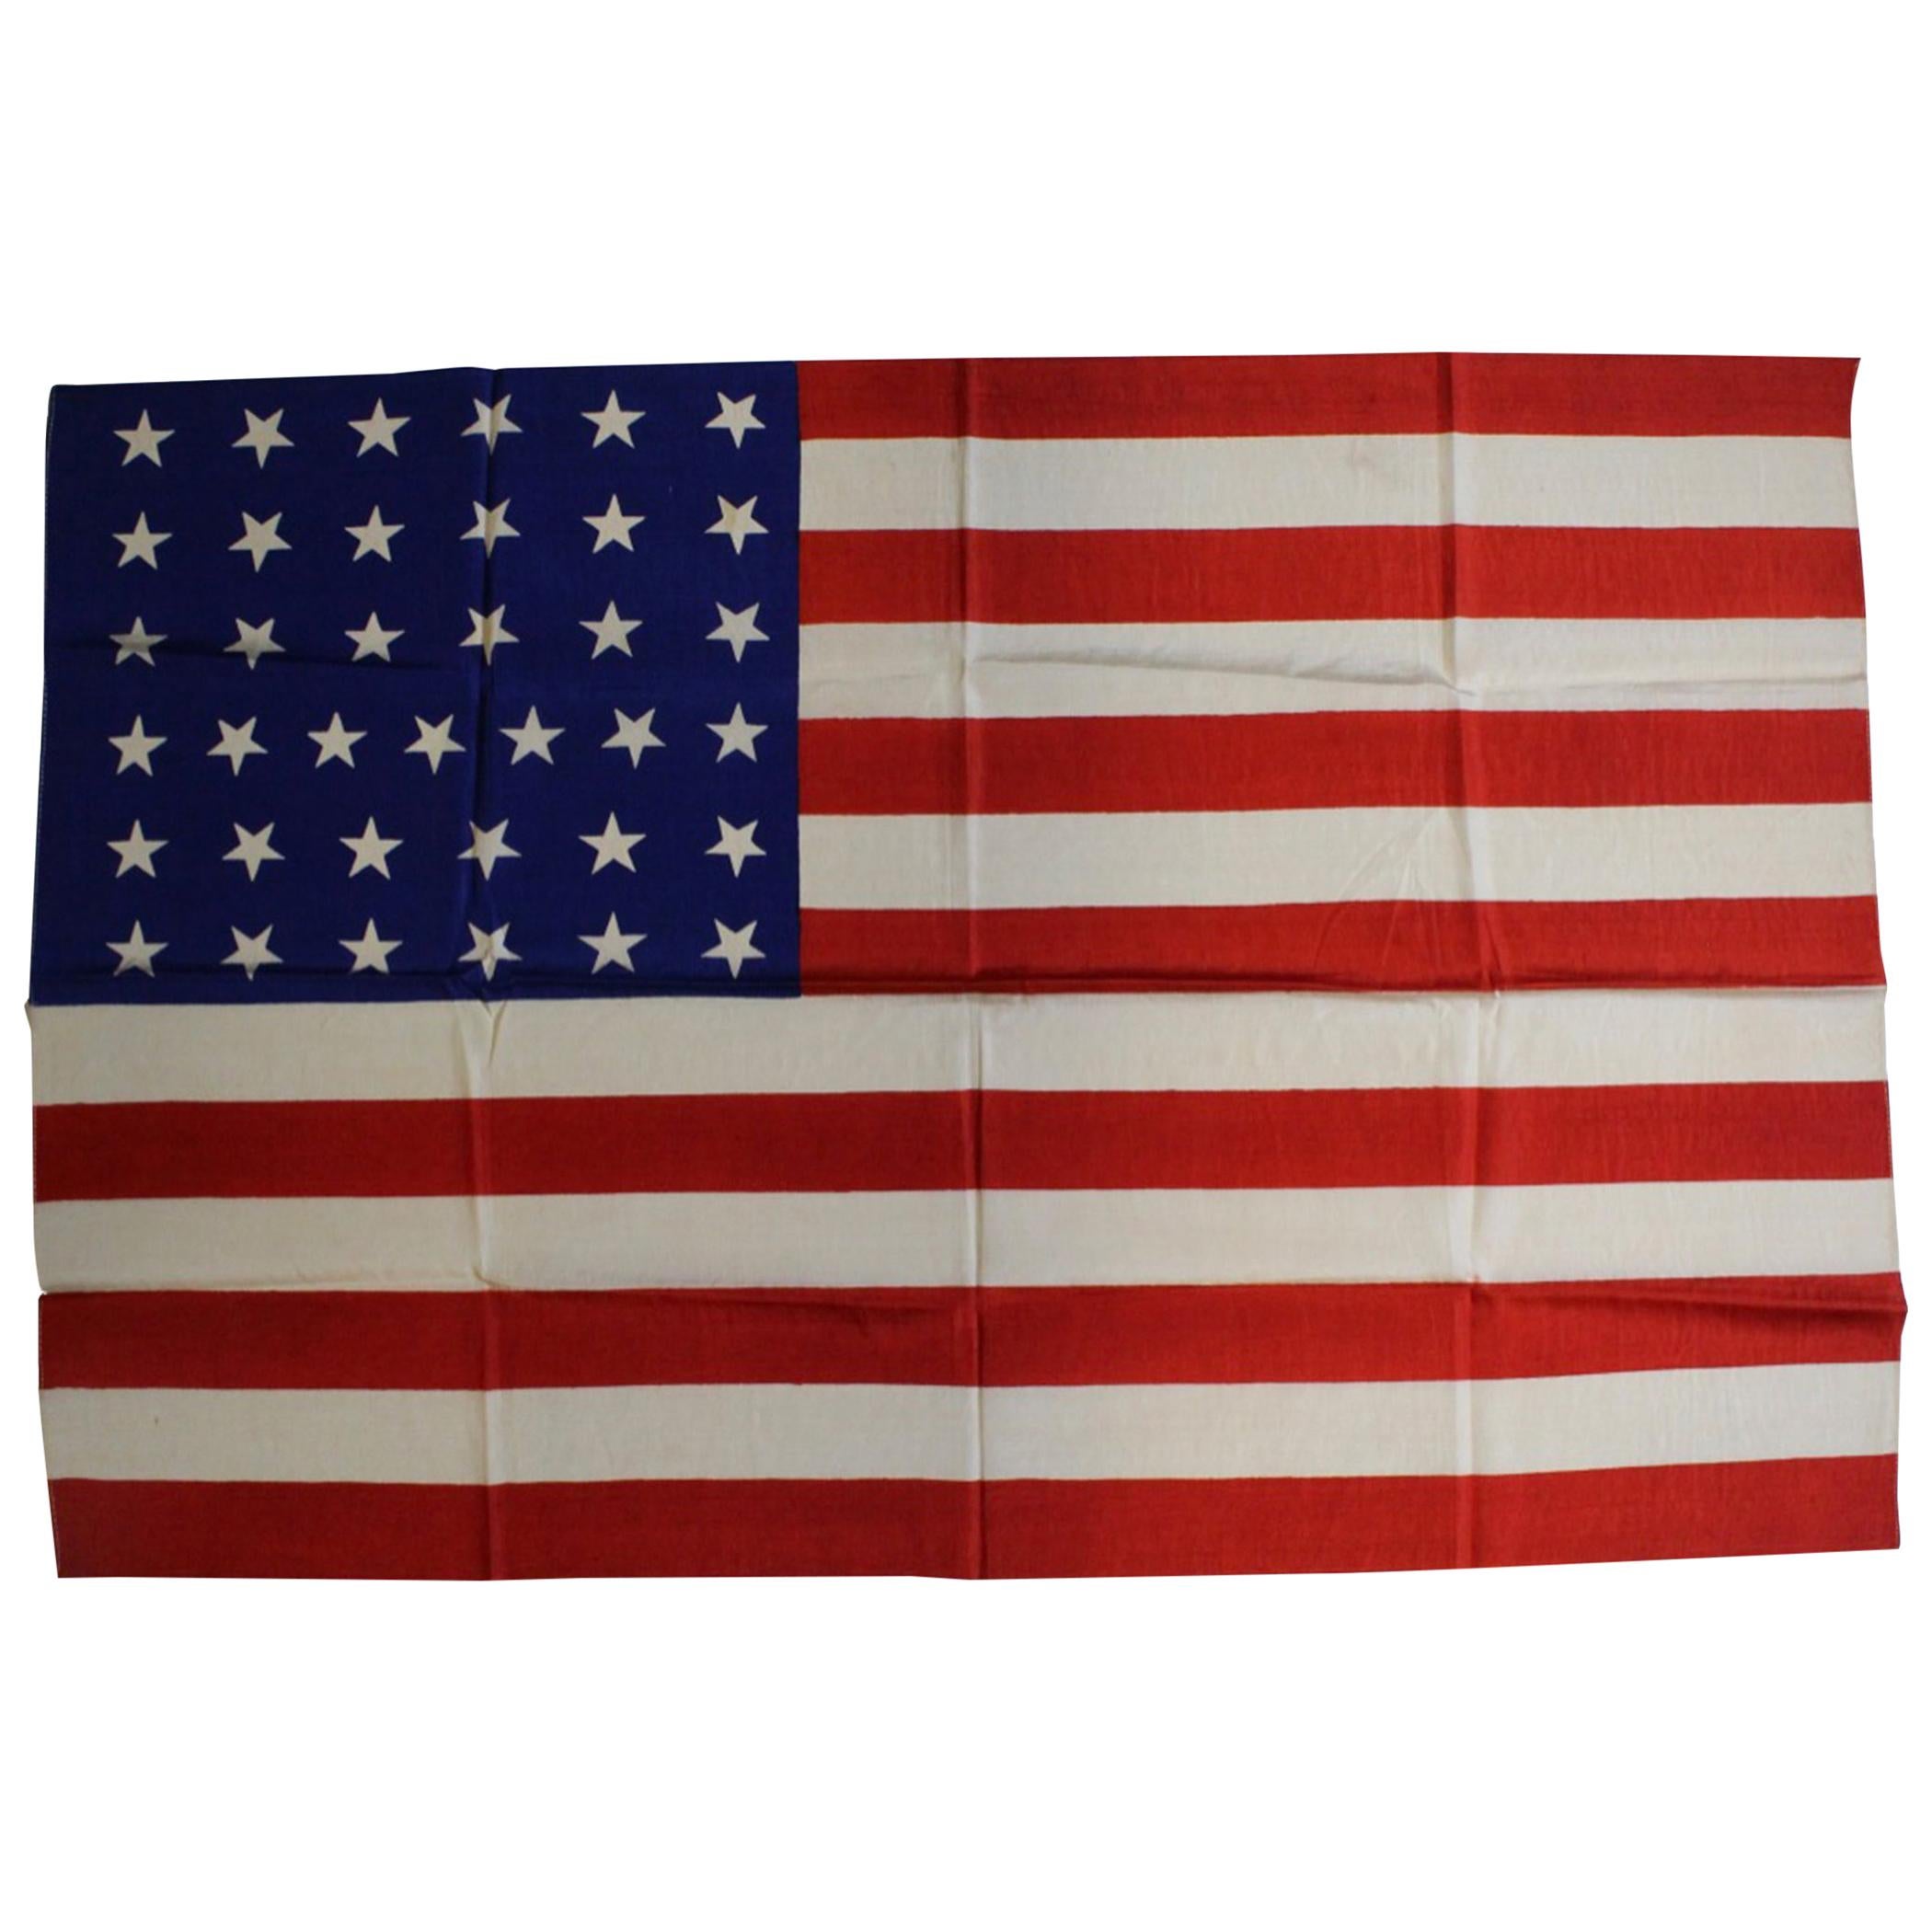 Antique 37-Star American Flag Printed on Silk, circa 1867